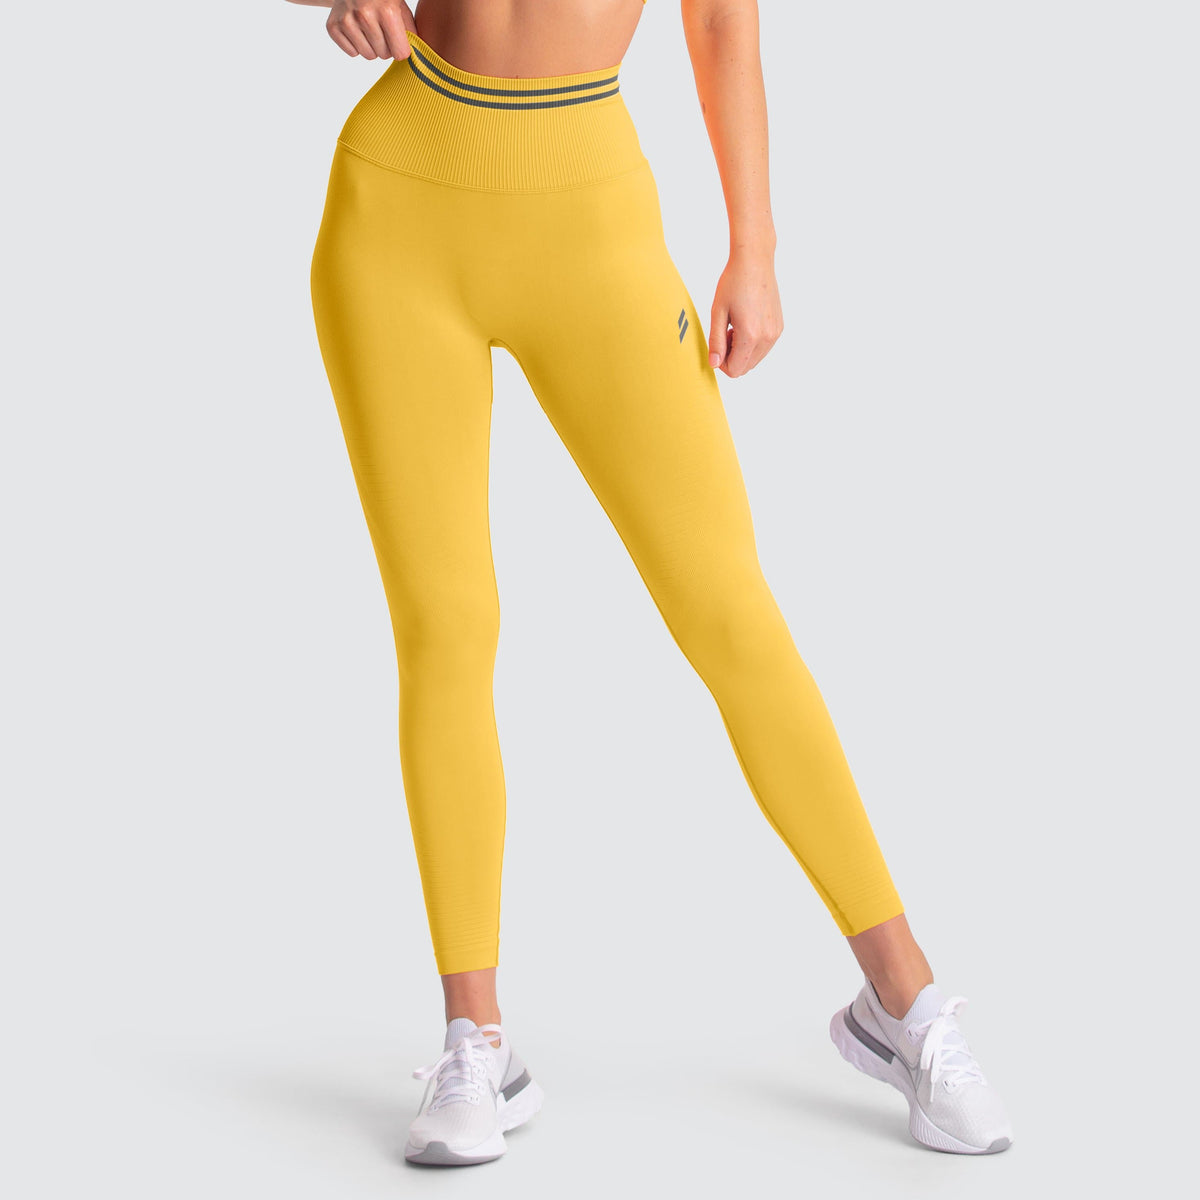 Lemon Yellow Leggings for Sale by ColorEffects